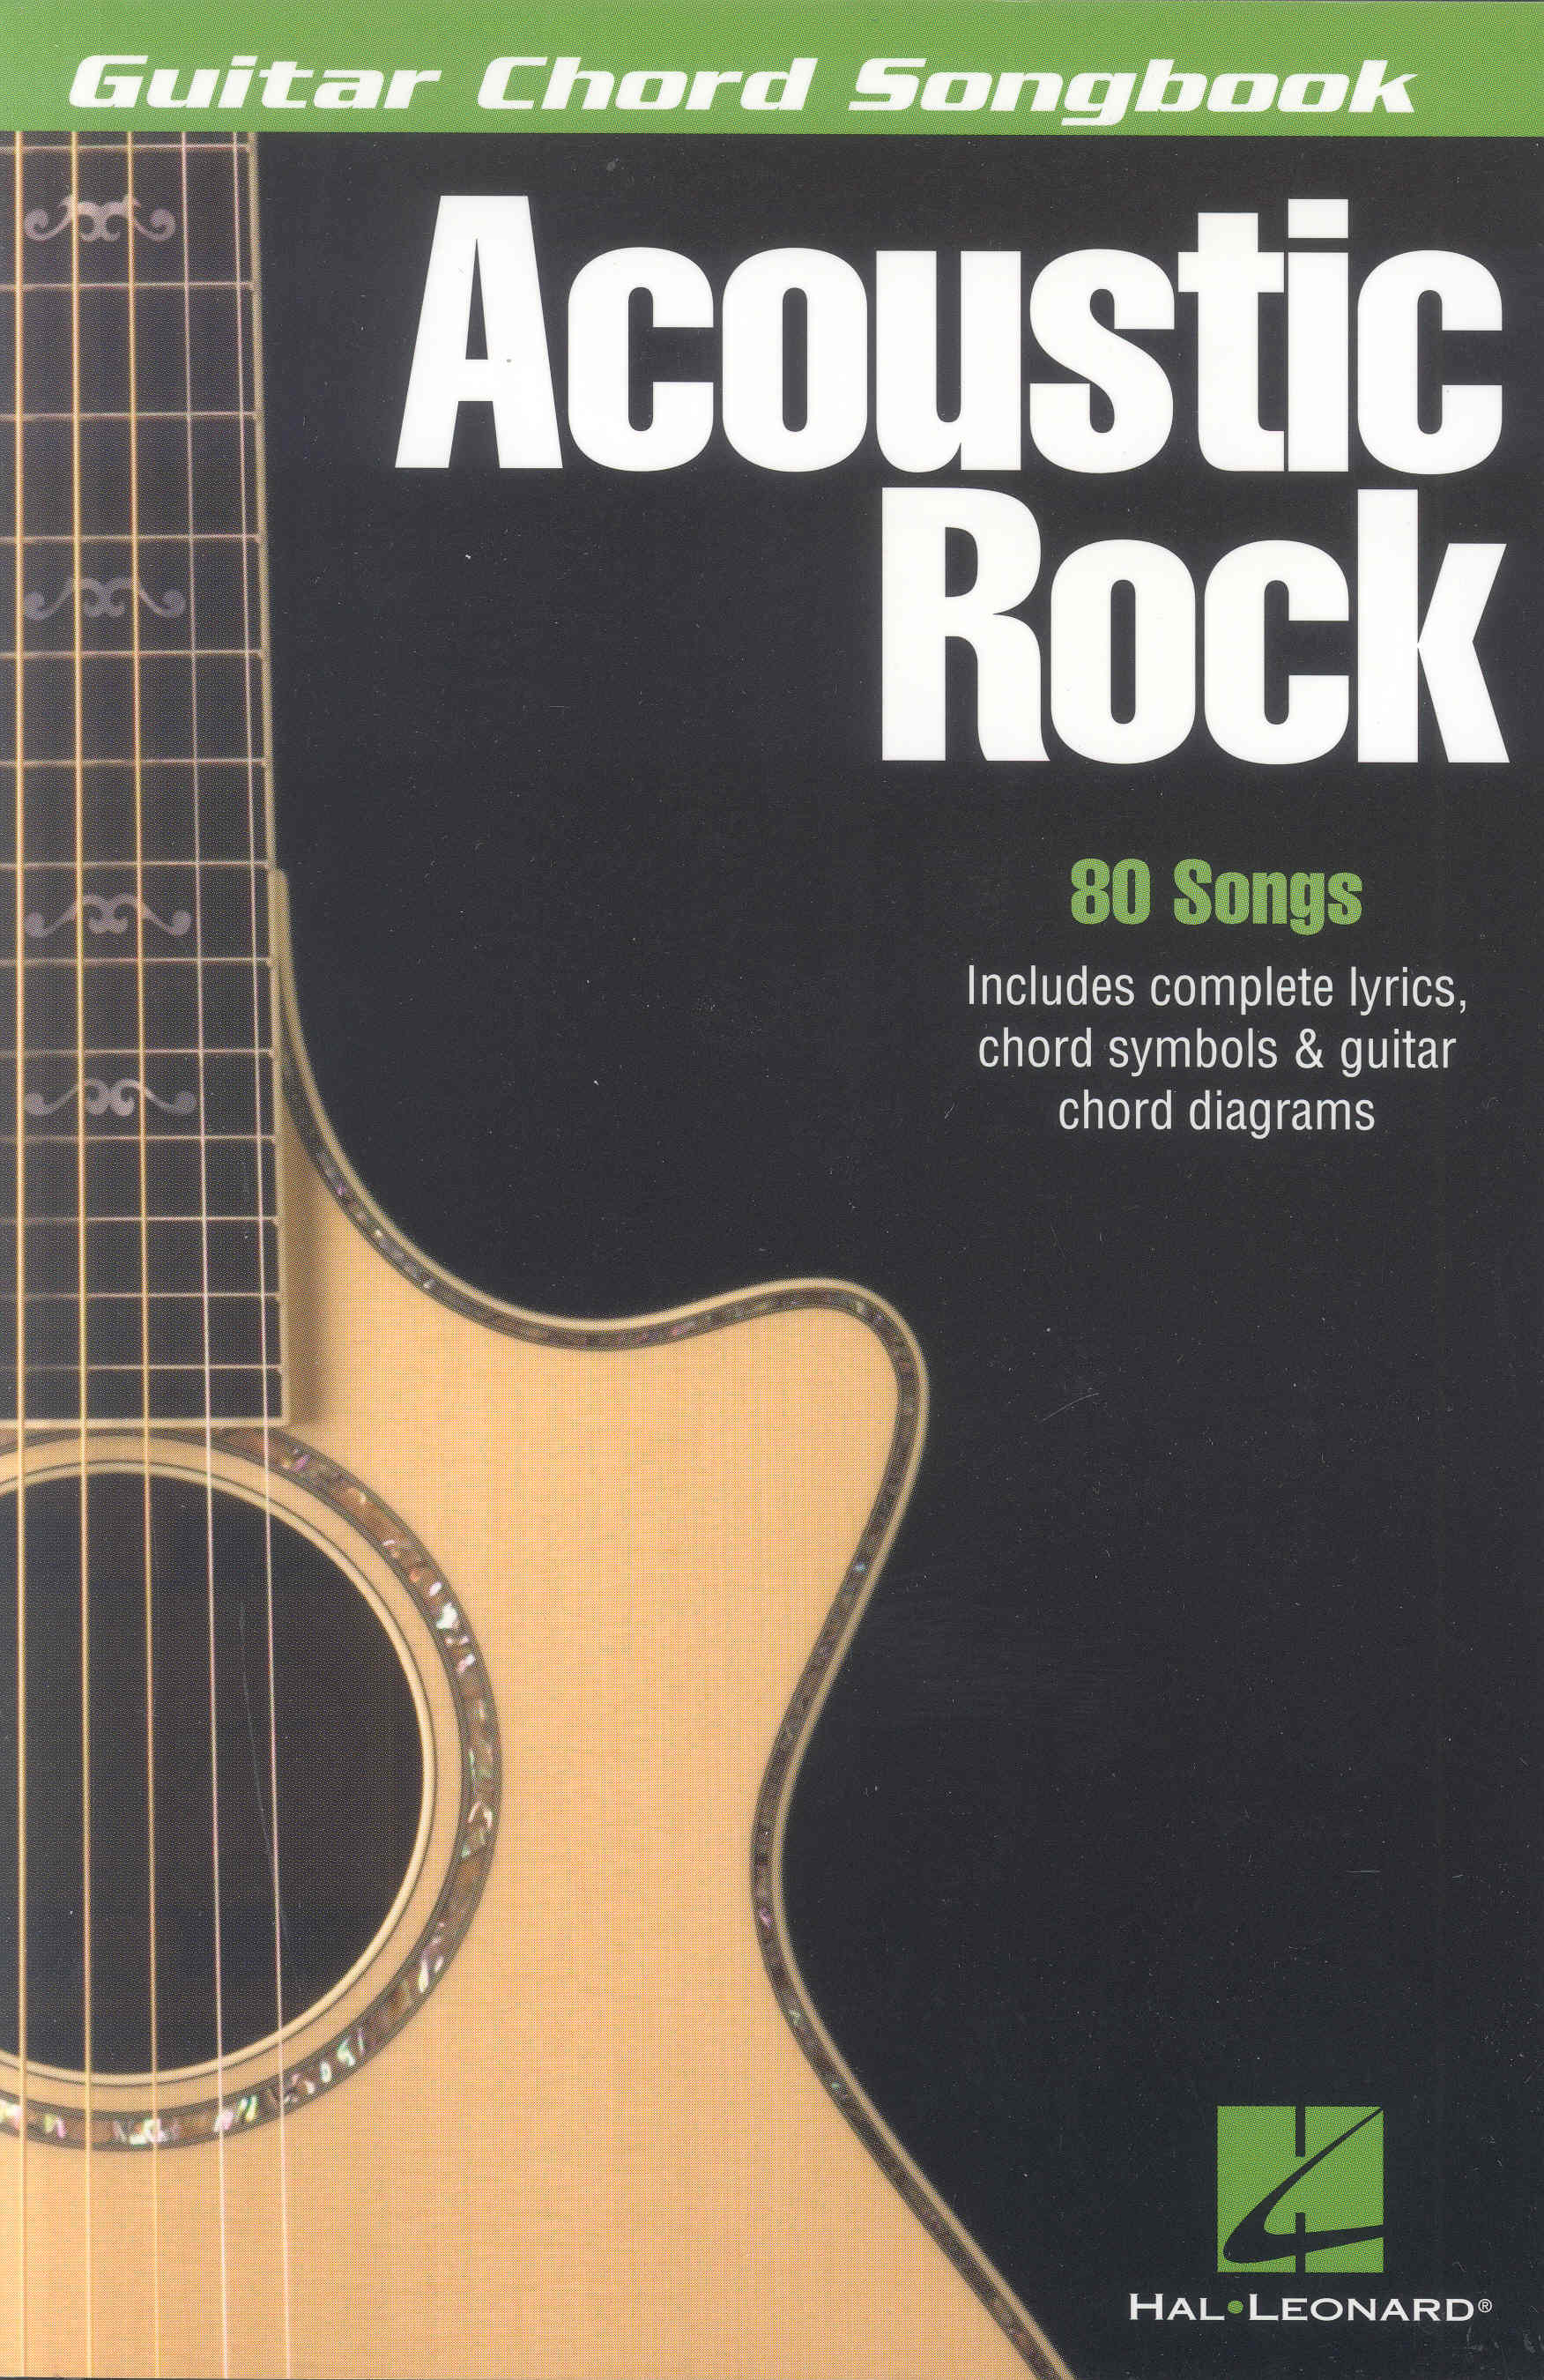 Guitar Chord Songbook Acoustic Rock Sheet Music Songbook